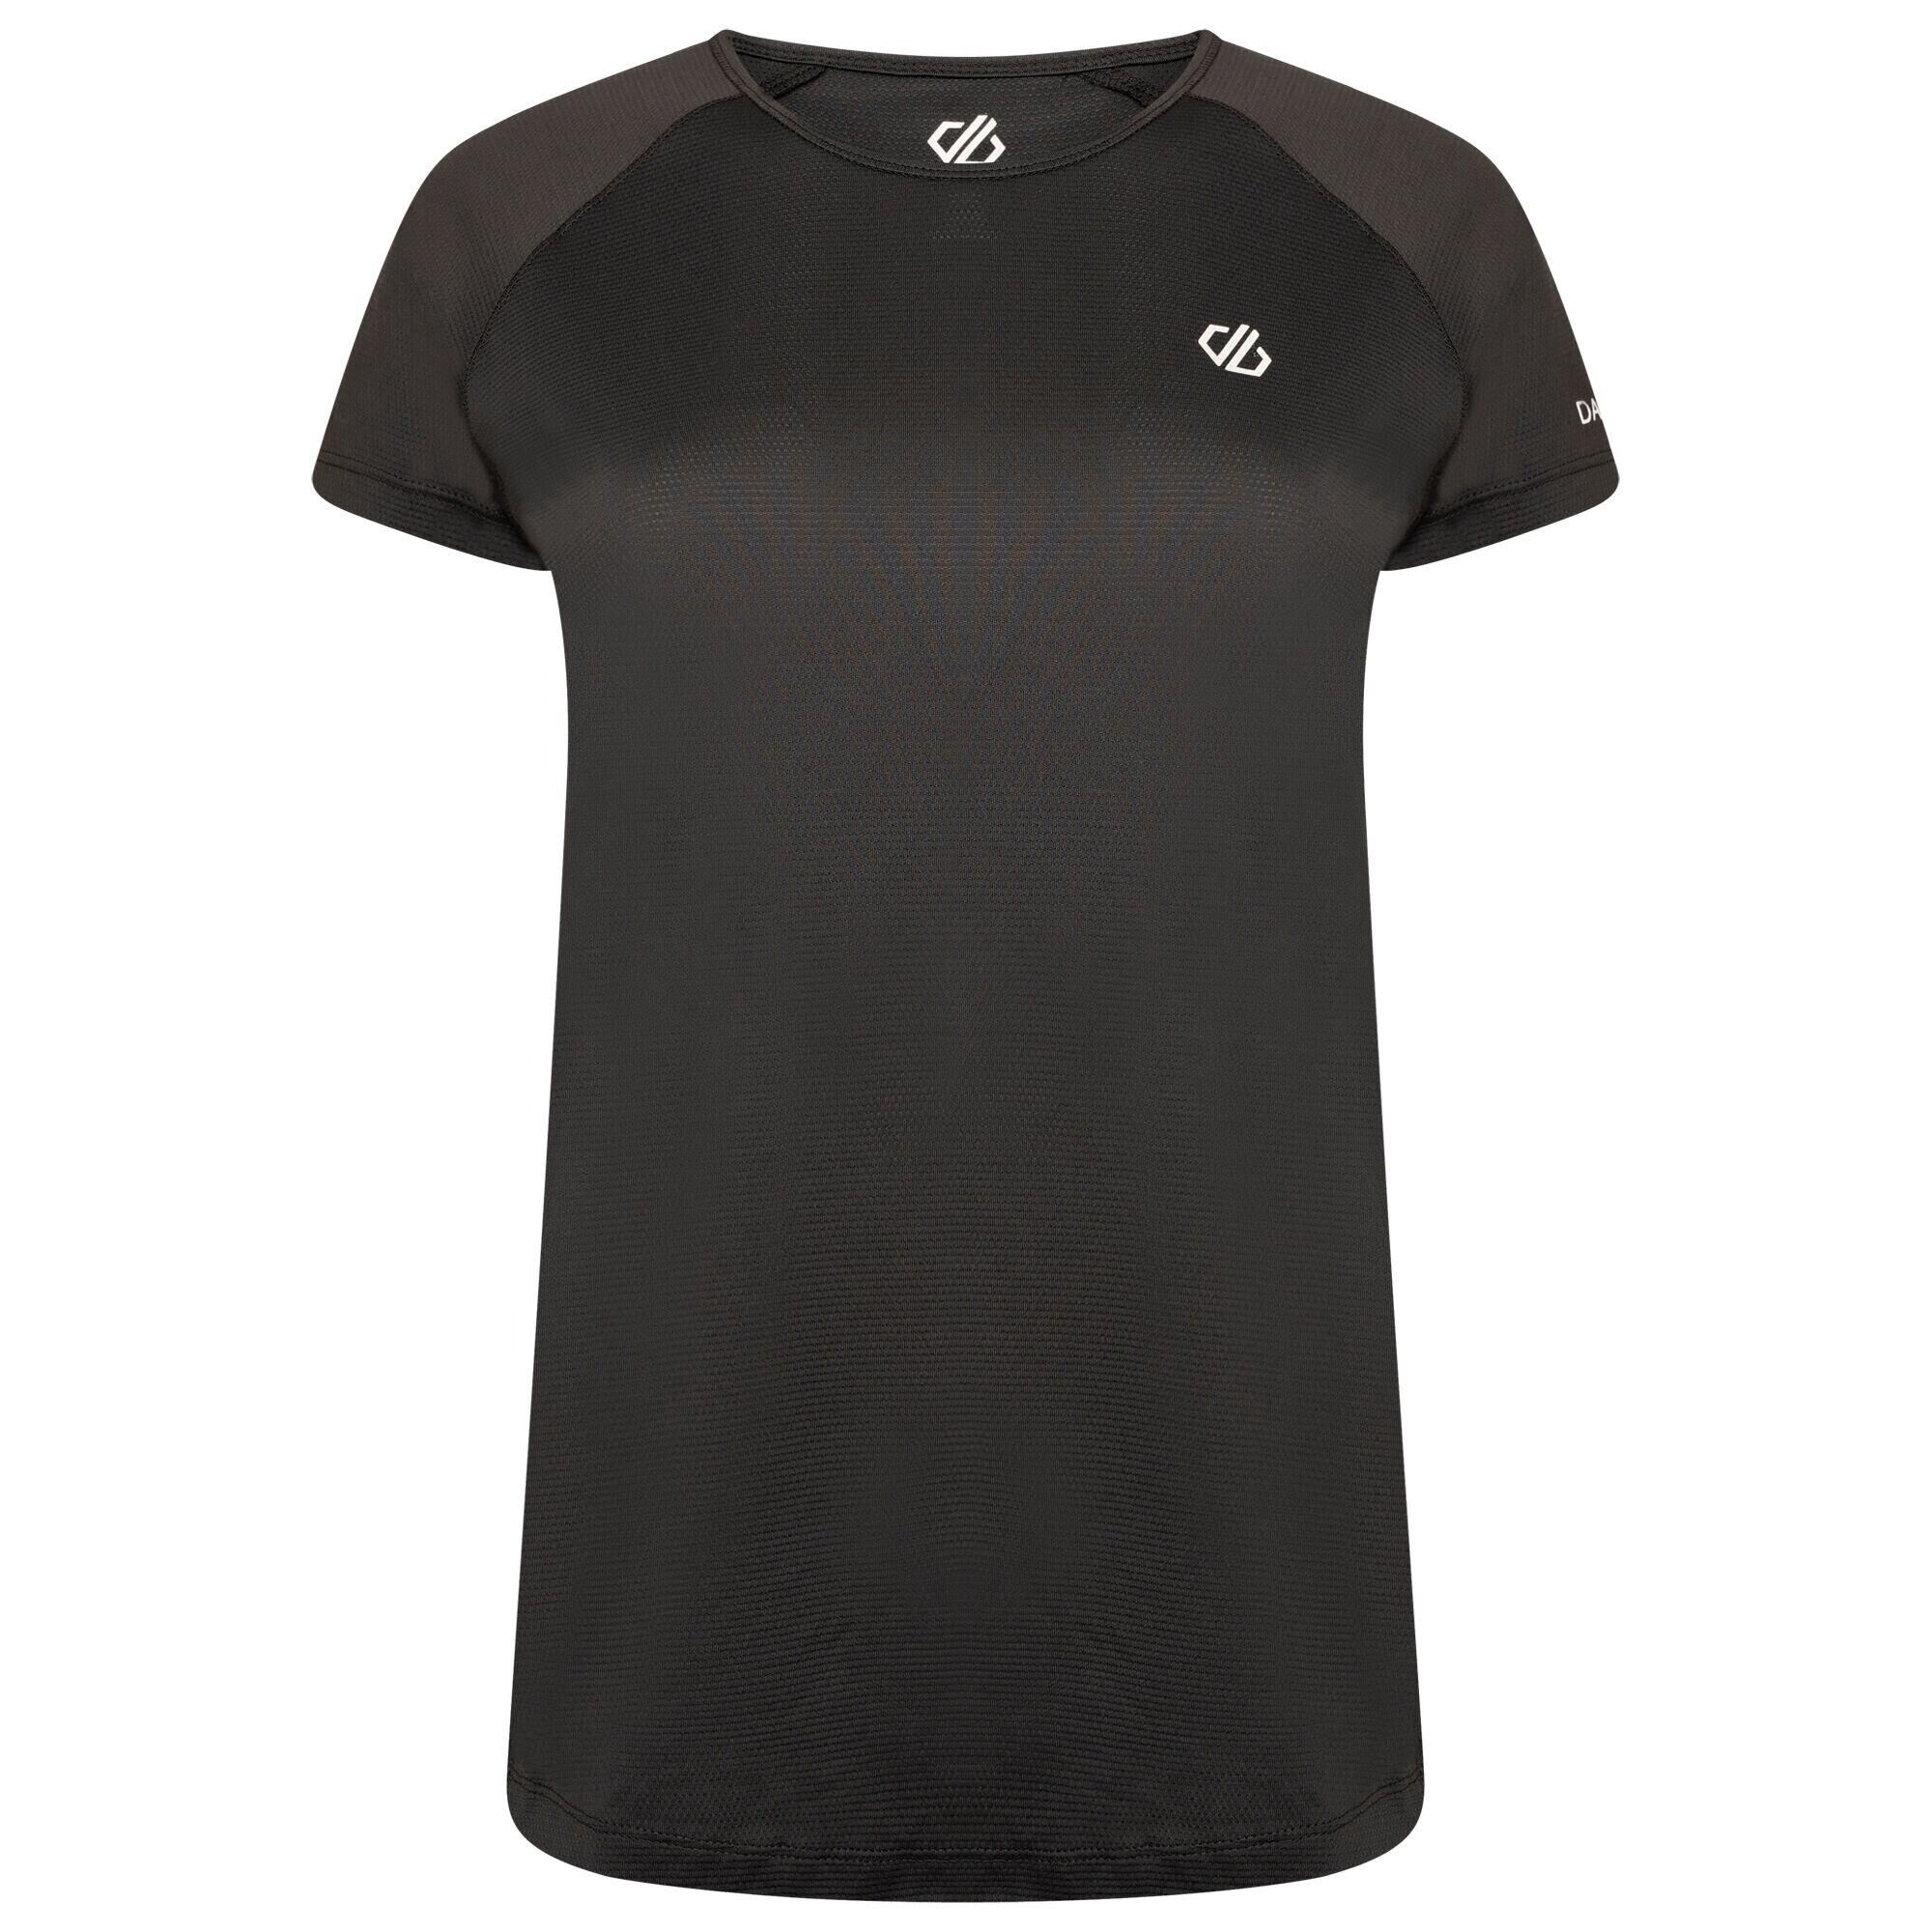 DARE 2B Corral Women's Fitness Short Sleeve T-Shirt - Black